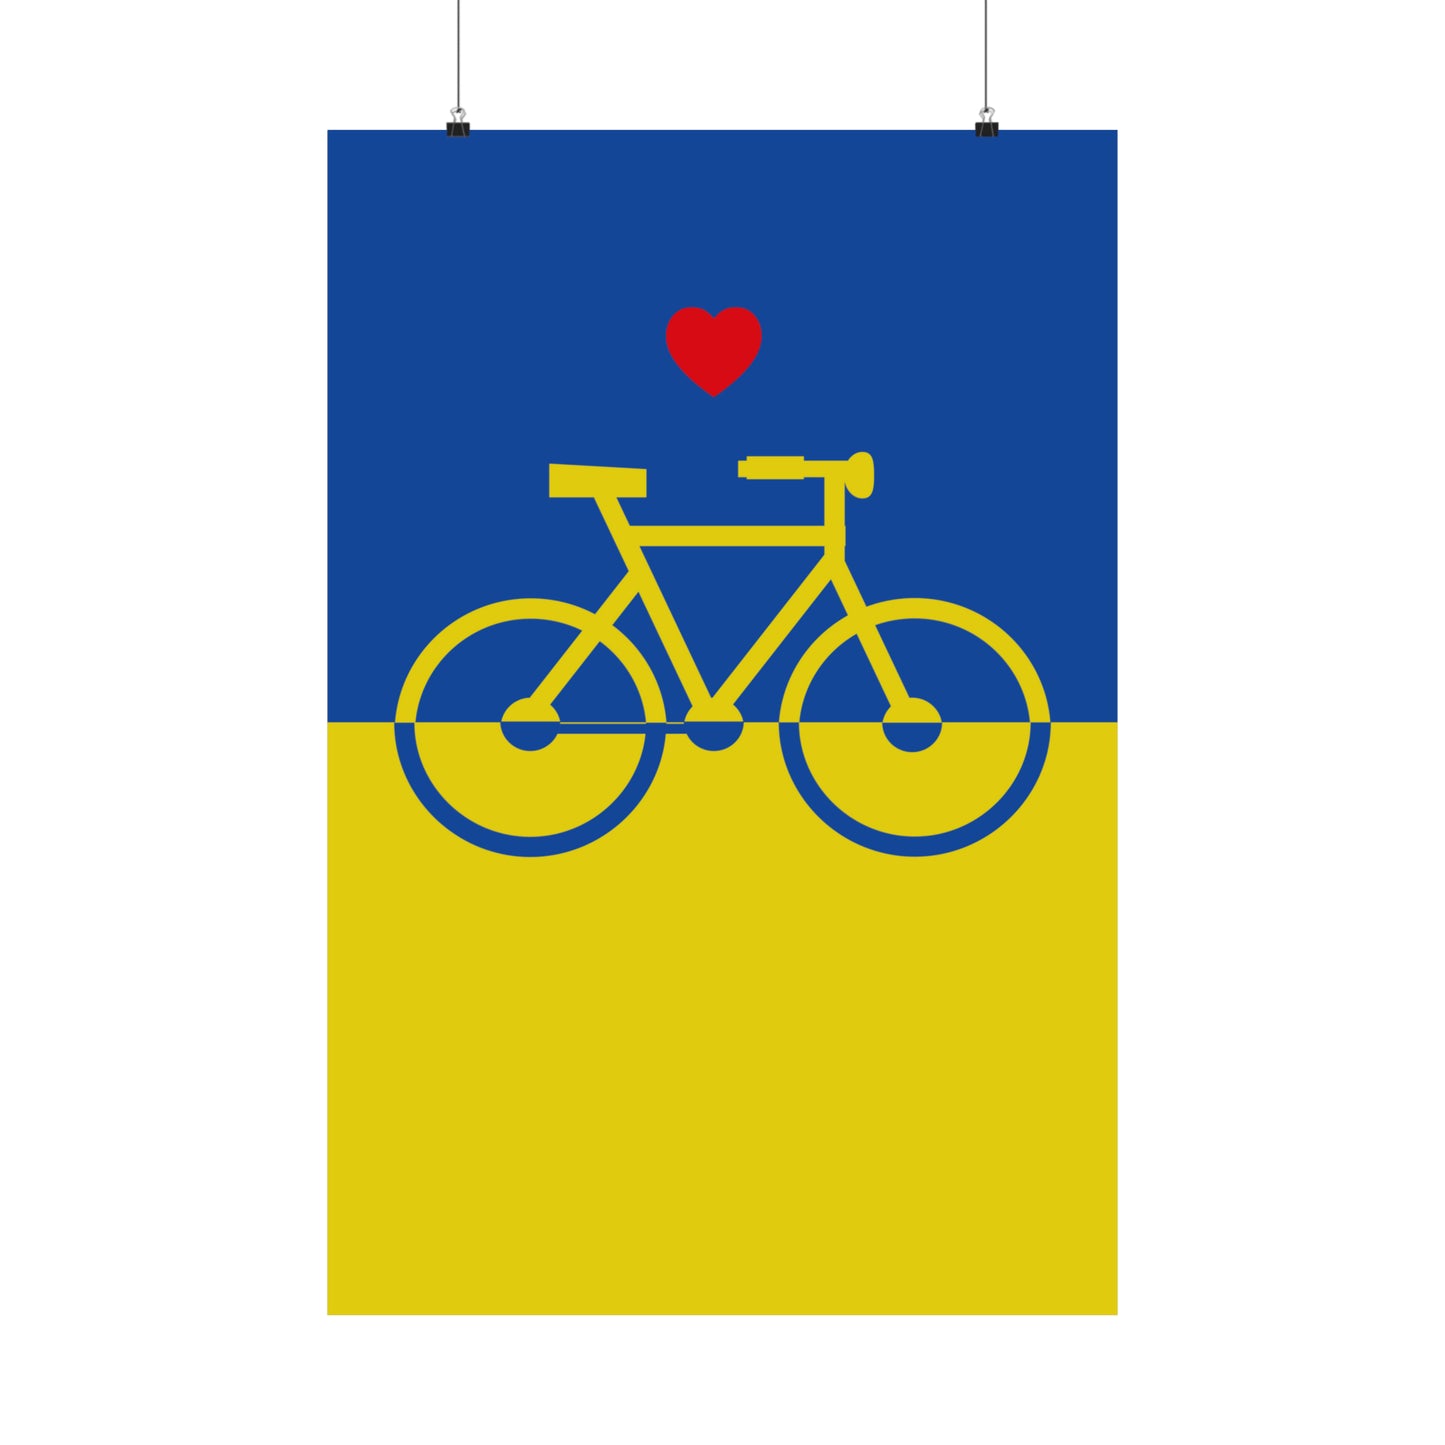 Bikes4Ukraine - Poster by Povl Lystrup Thomsen (DK)